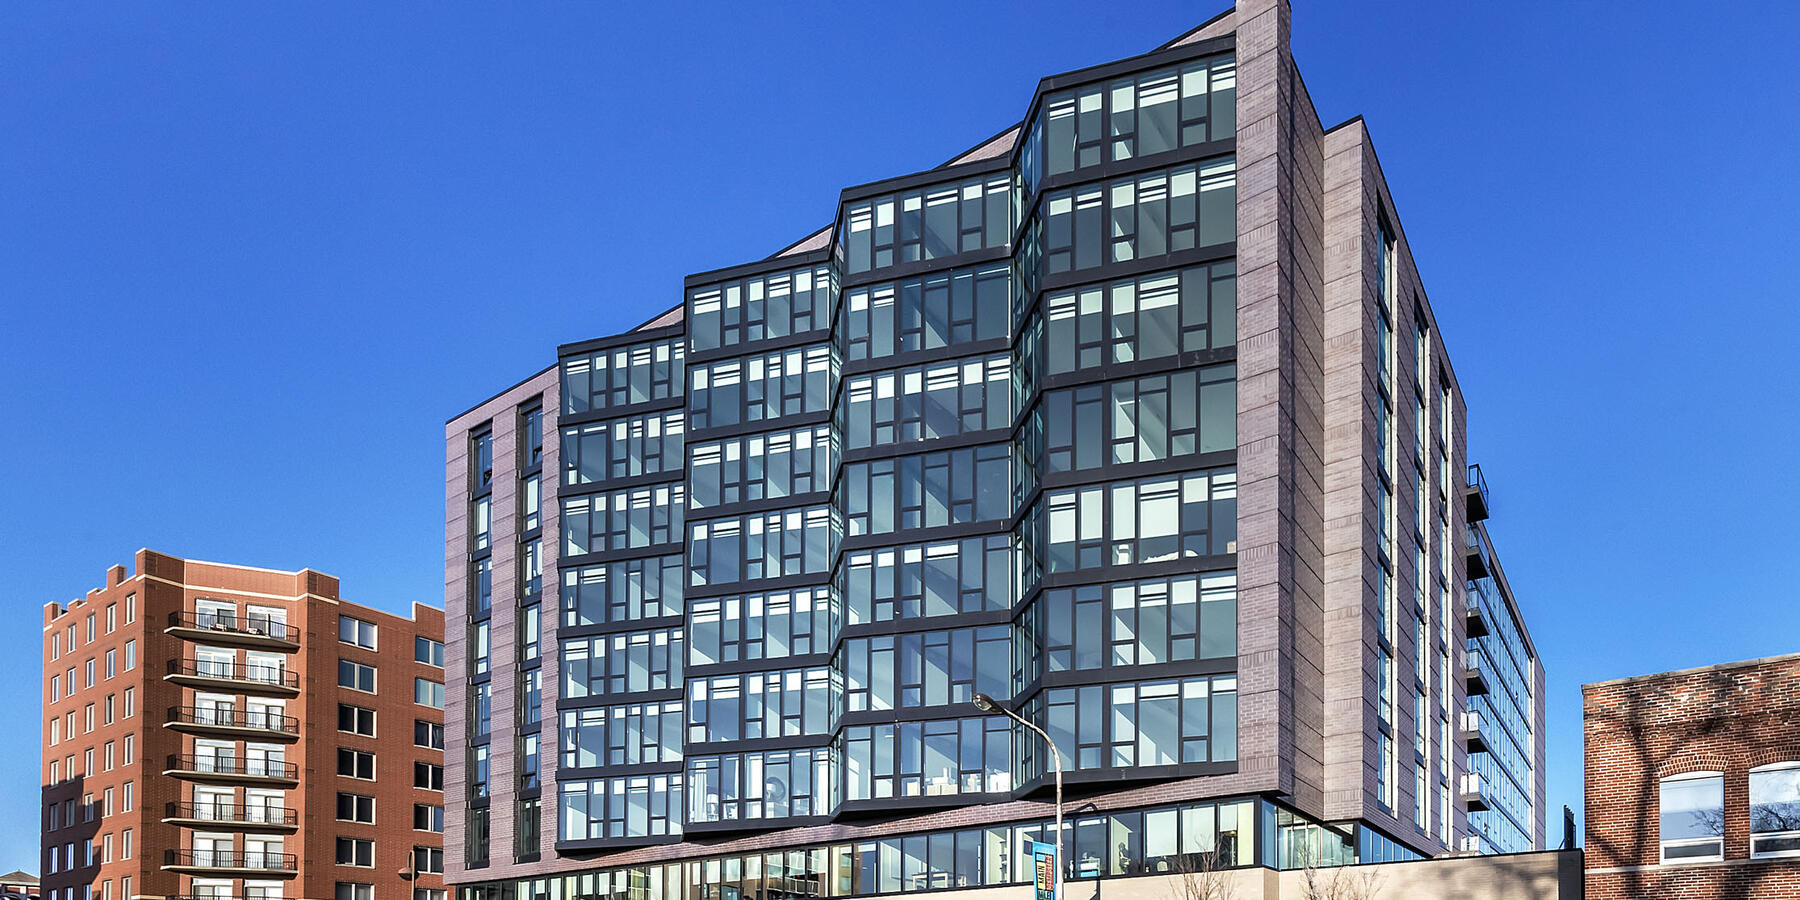 Chicago Luxury Apartment Development - The Main exterior full length shot of building